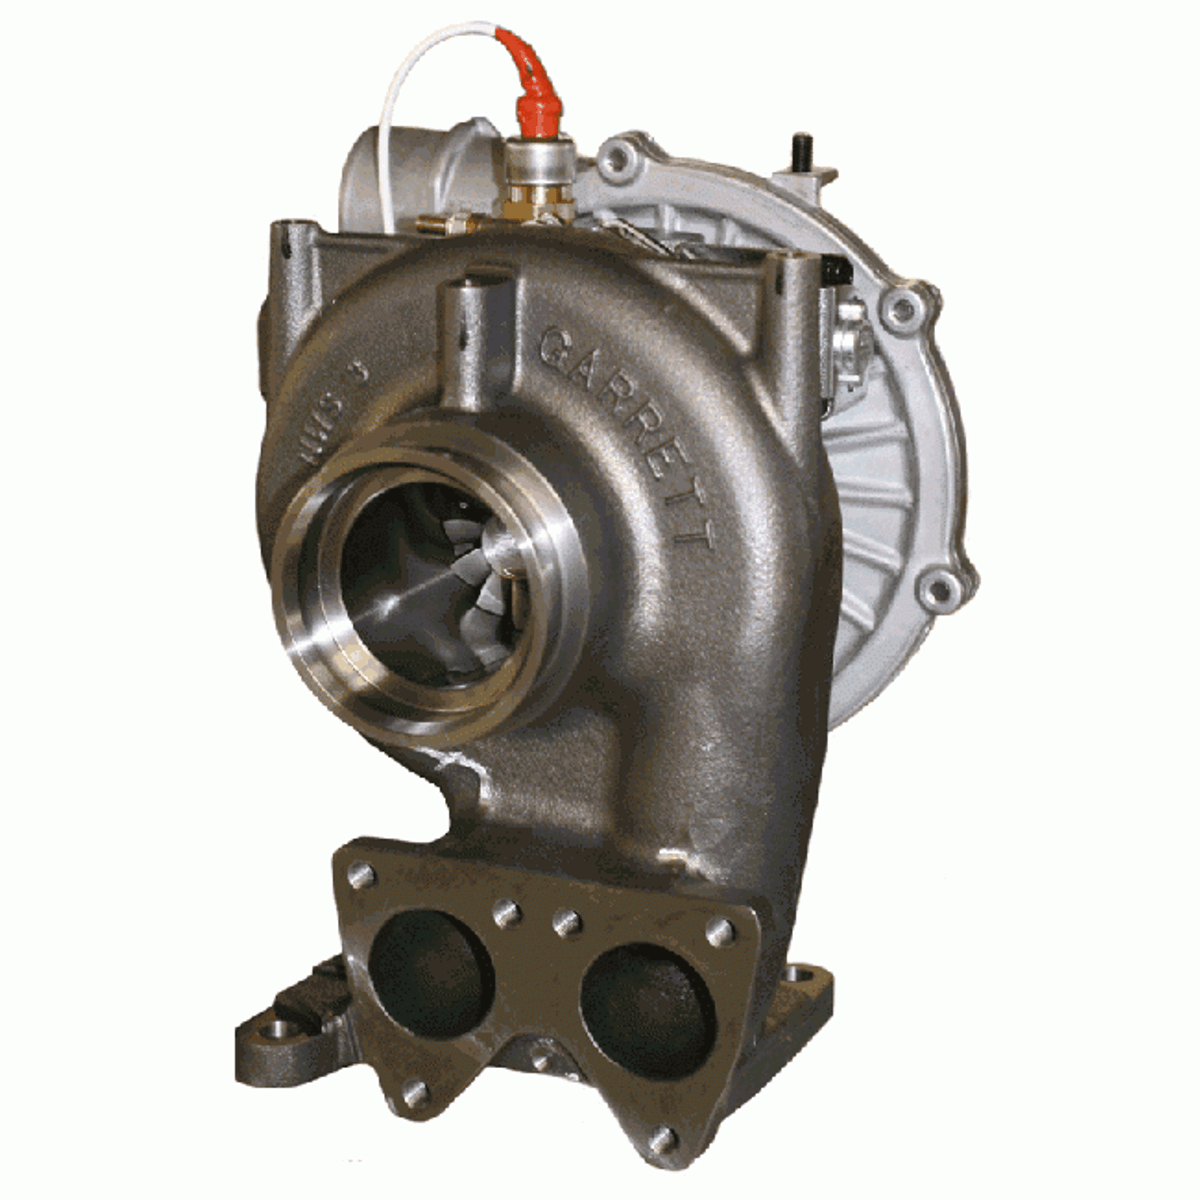 Stage 2 Turbocharger - 2004.5-2010 GM 6.6L LLY LBZ LMM Duramax 773542-5001